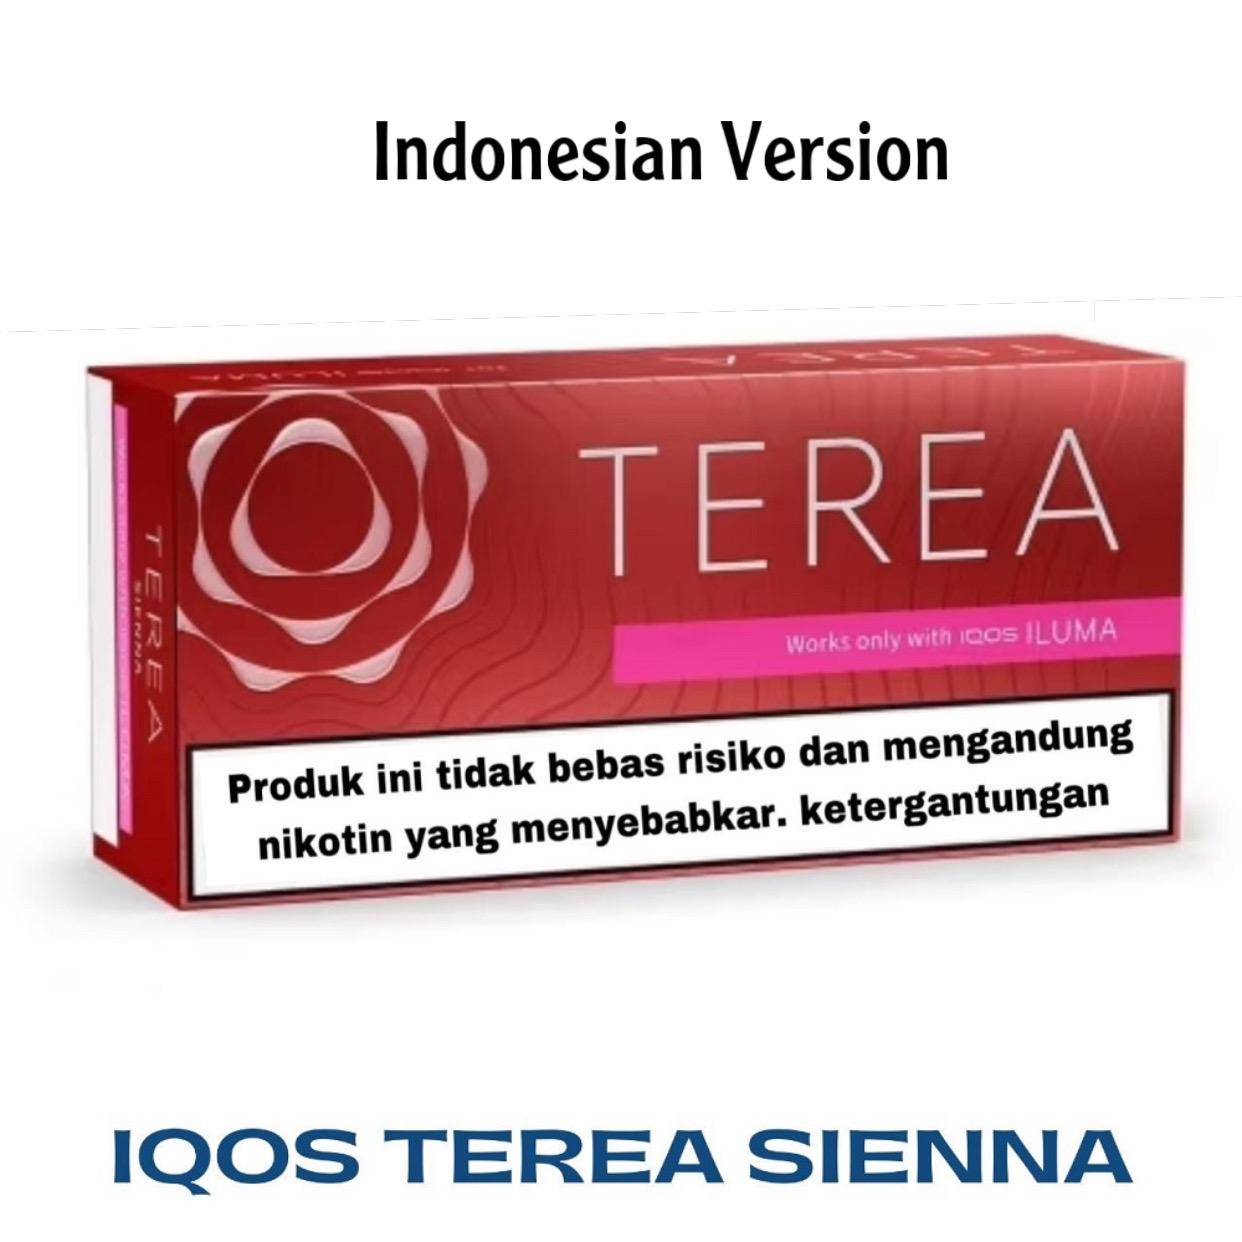 Terea Archives